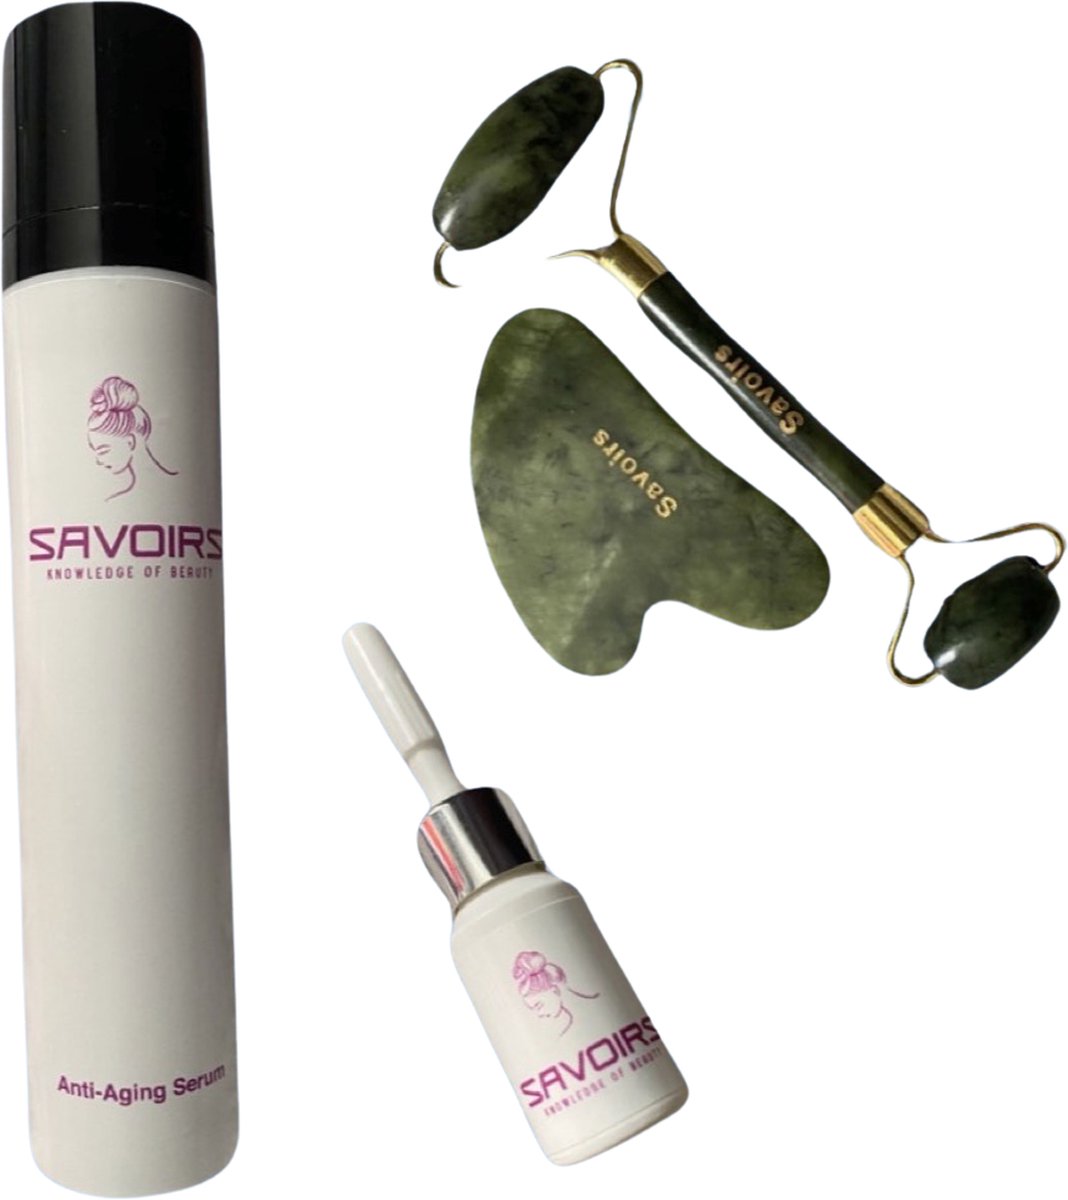 Anti-aging serum bio 50 ml(Anti-wrinkle) inclusief Jade roller met Gua sha gezicht massage en mini Luxury serum bio 5ml Anti-aging.